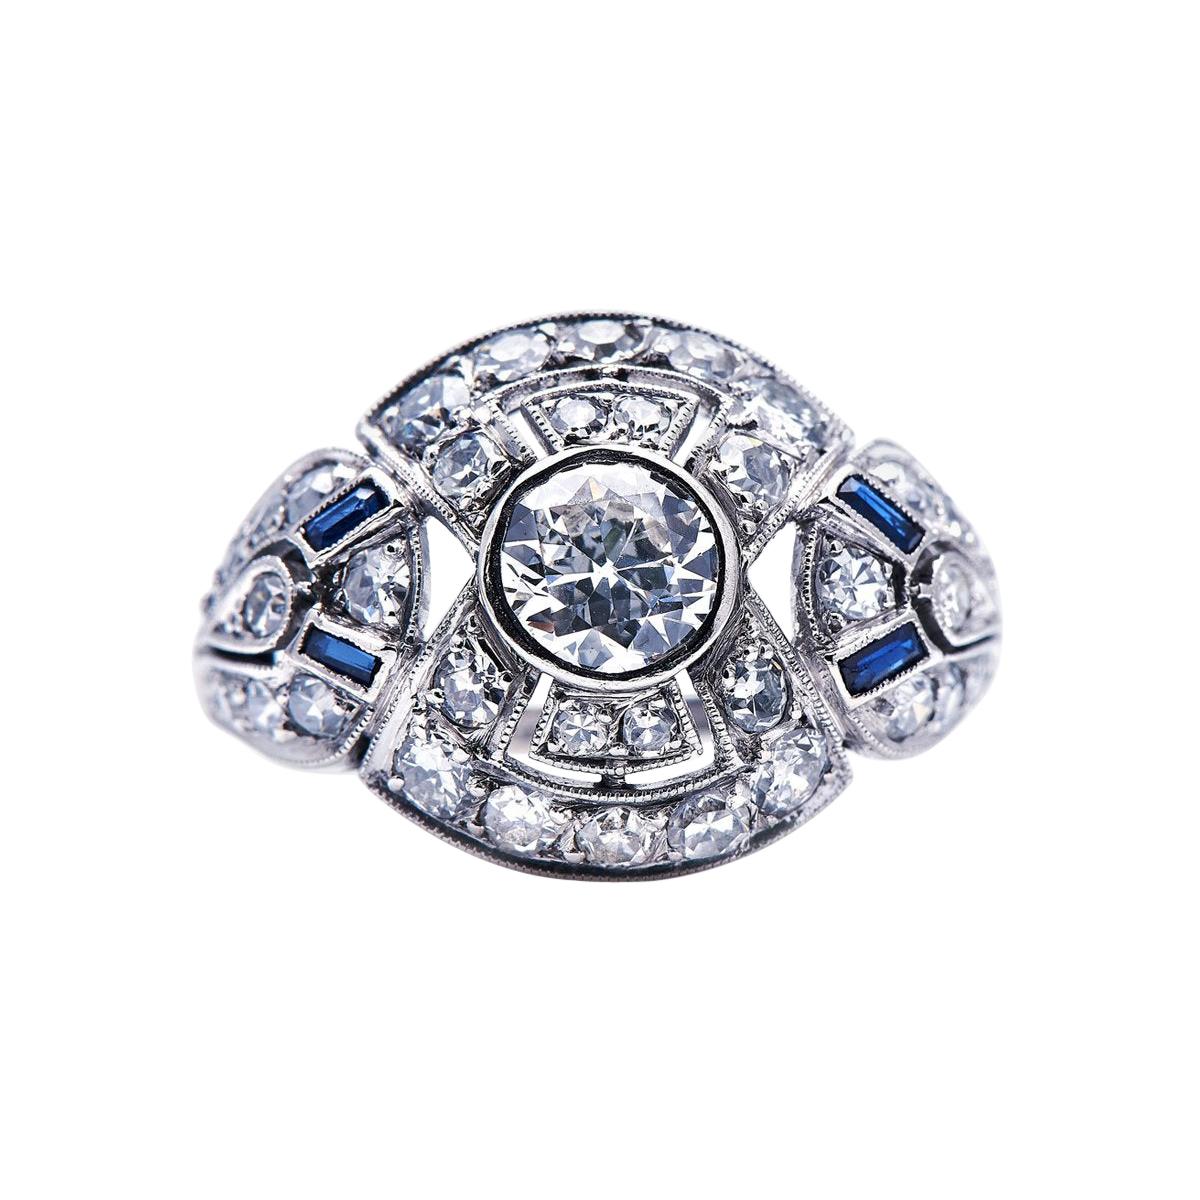 Antique, Art Deco, French, Platinum, Diamond and Sapphire Bombé Ring